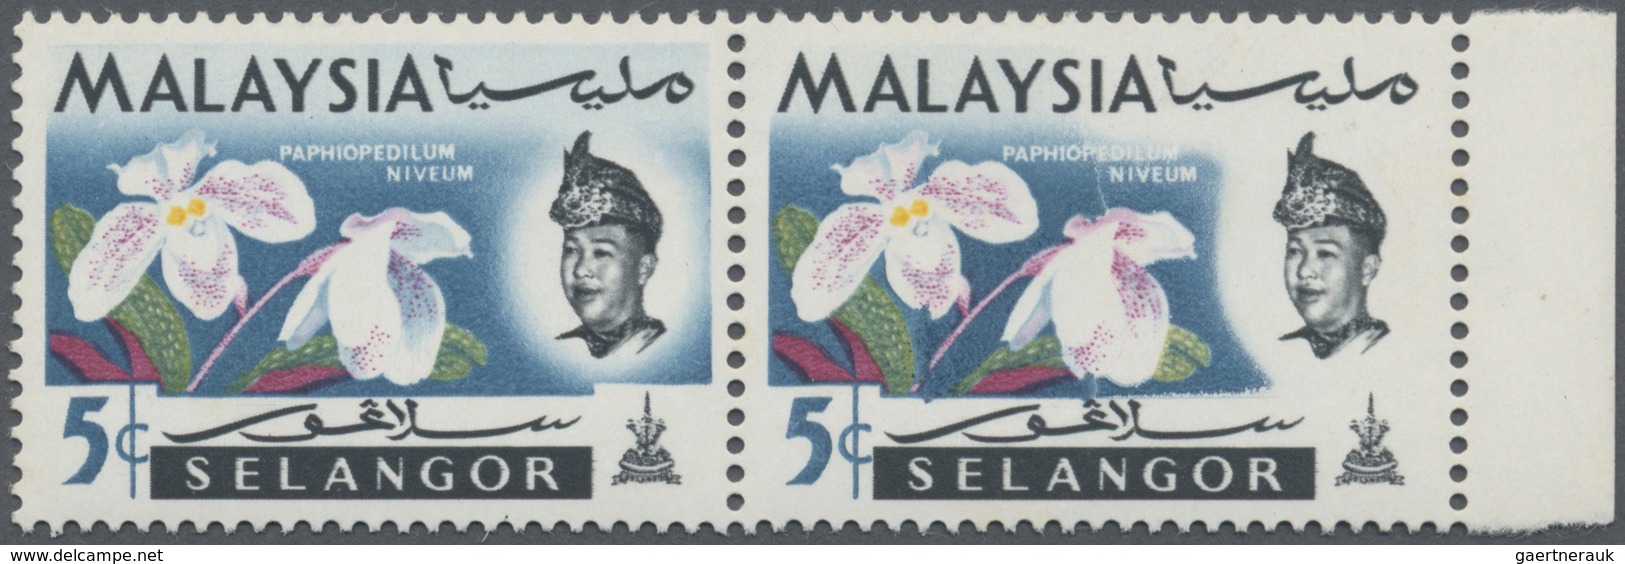 ** Malaiische Staaten - Selangor: 1965, Orchids 5c. 'Paphiopedilum Niveum' Horizontal Pair From Right M - Selangor